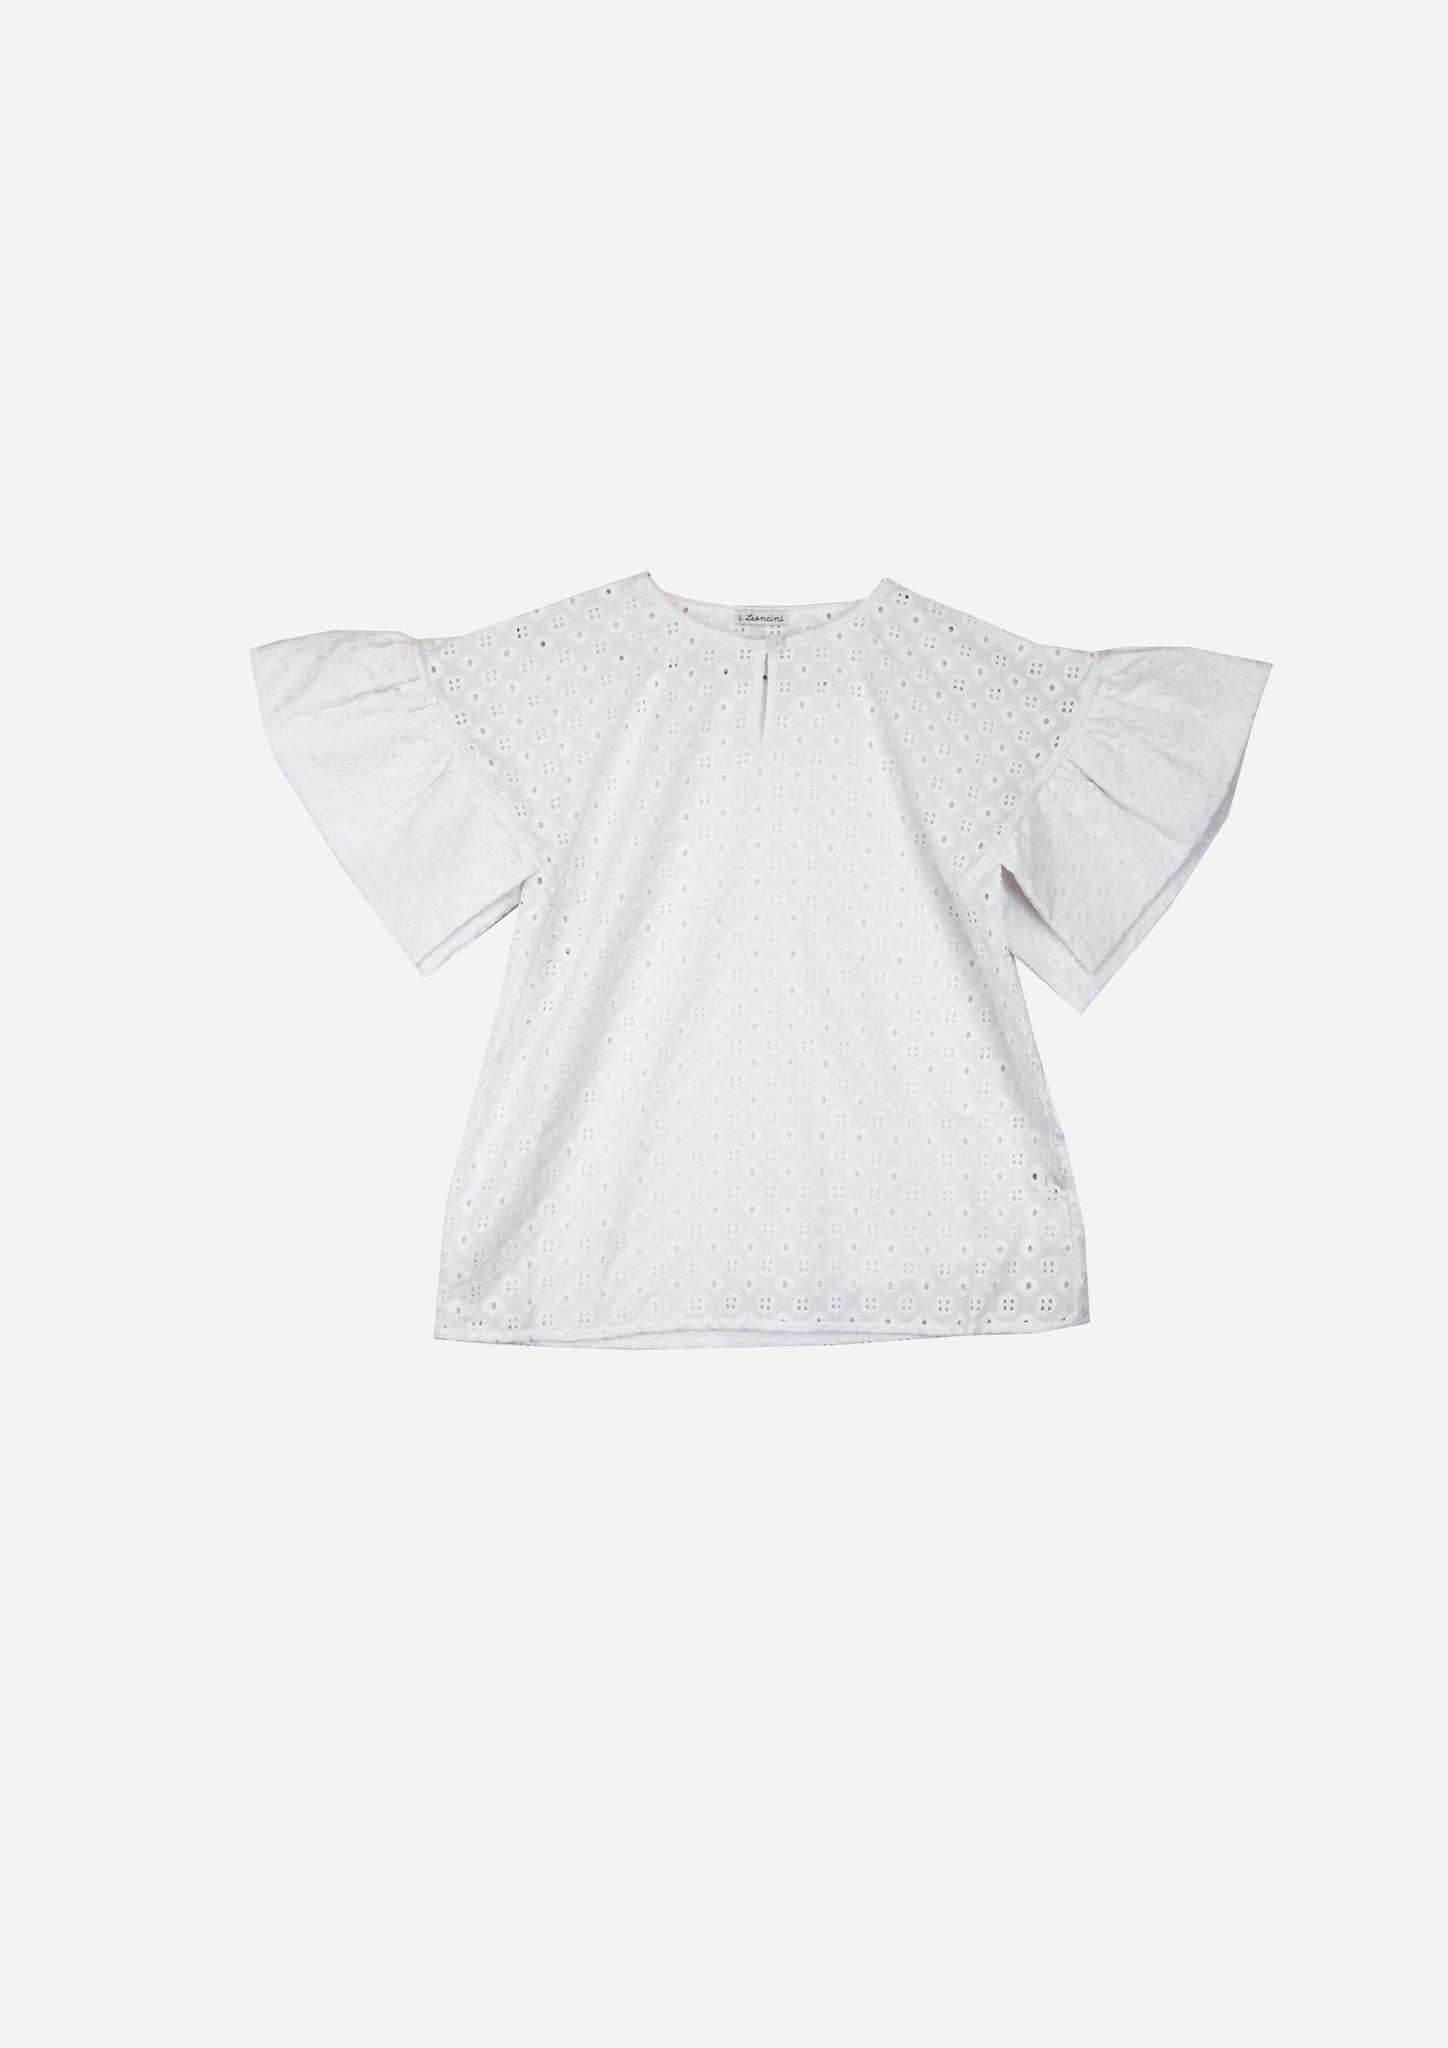 Camicia SELVAGGIA Bianco-OUTLET T-shirt, Camicie, Top e Canotte-I Leoncini Shop